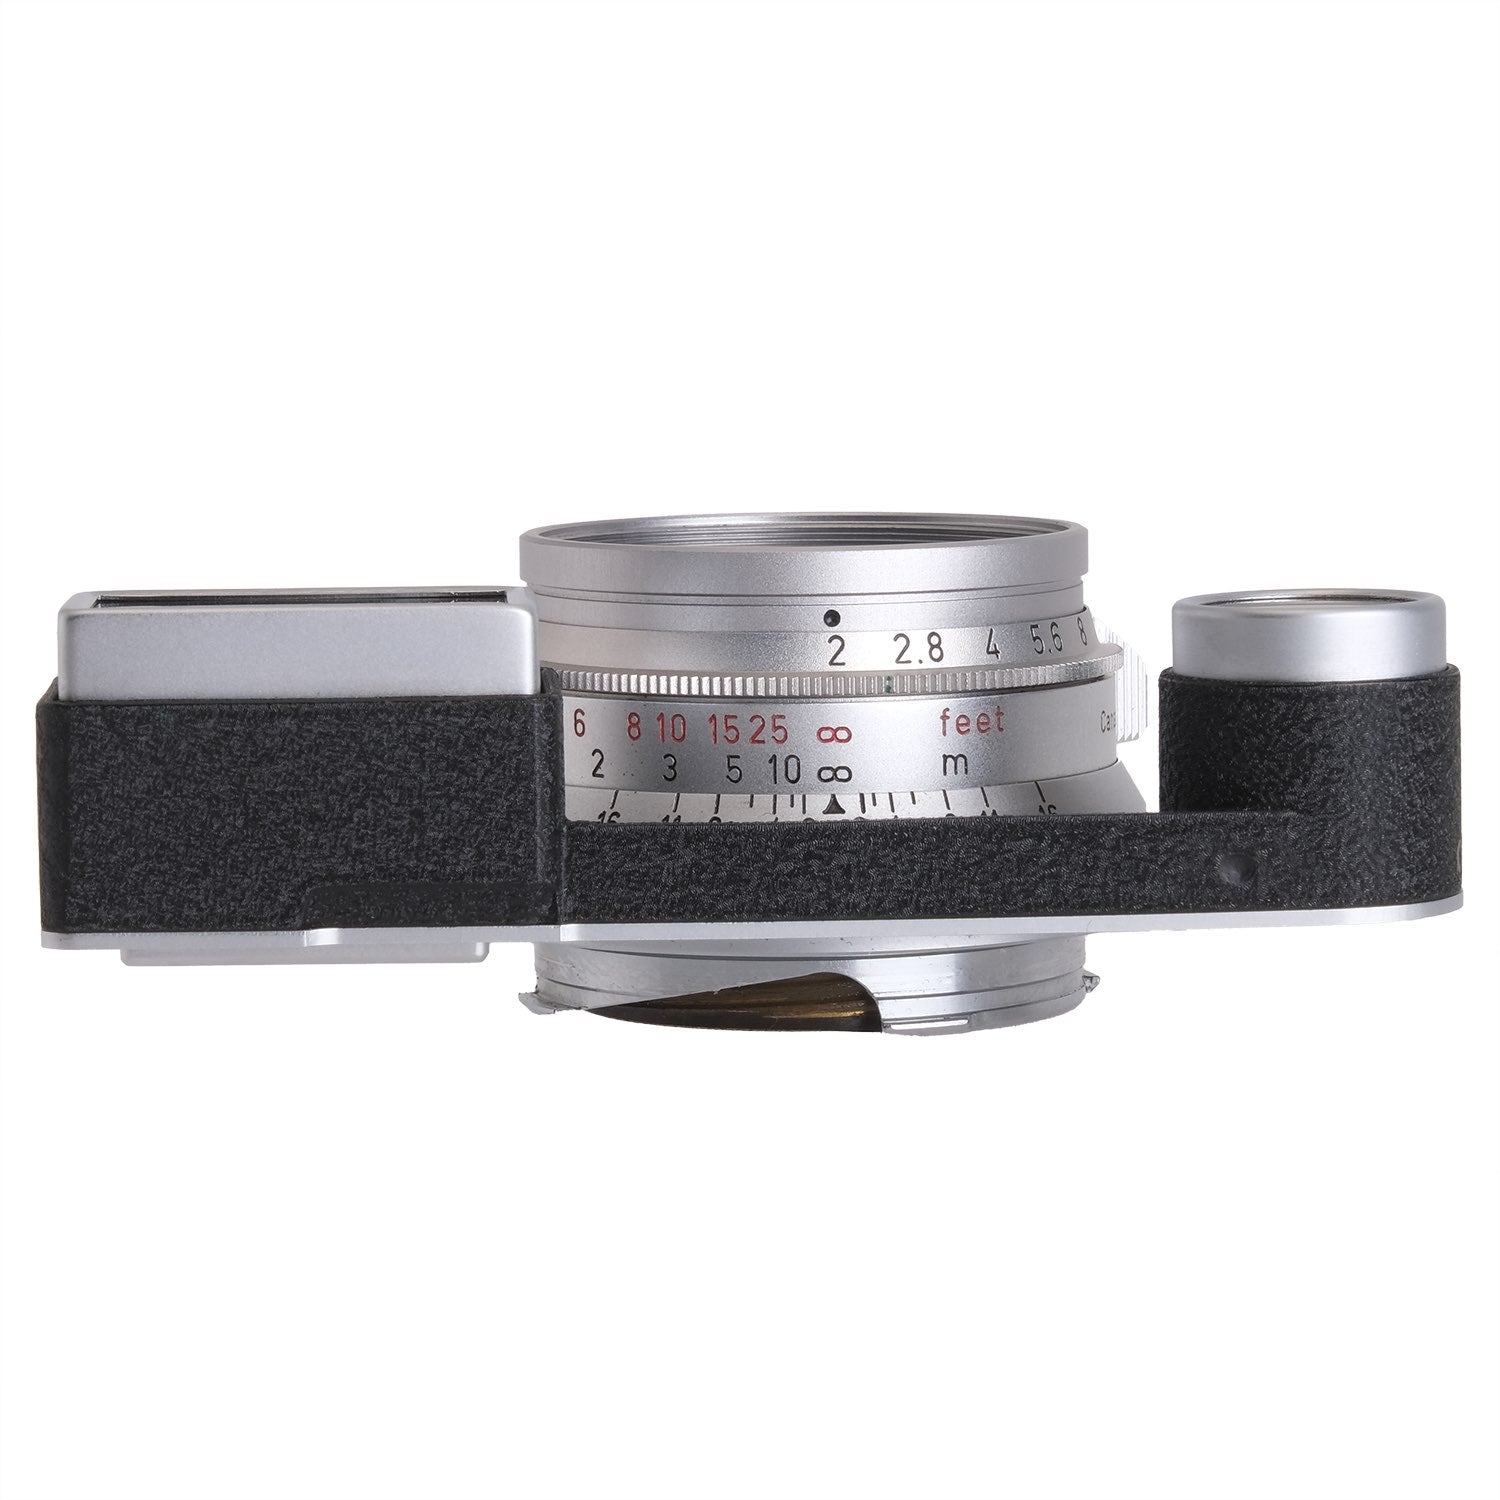 Leica 35mm f2 Summicron 8-Element M3, coating marks 2048297 